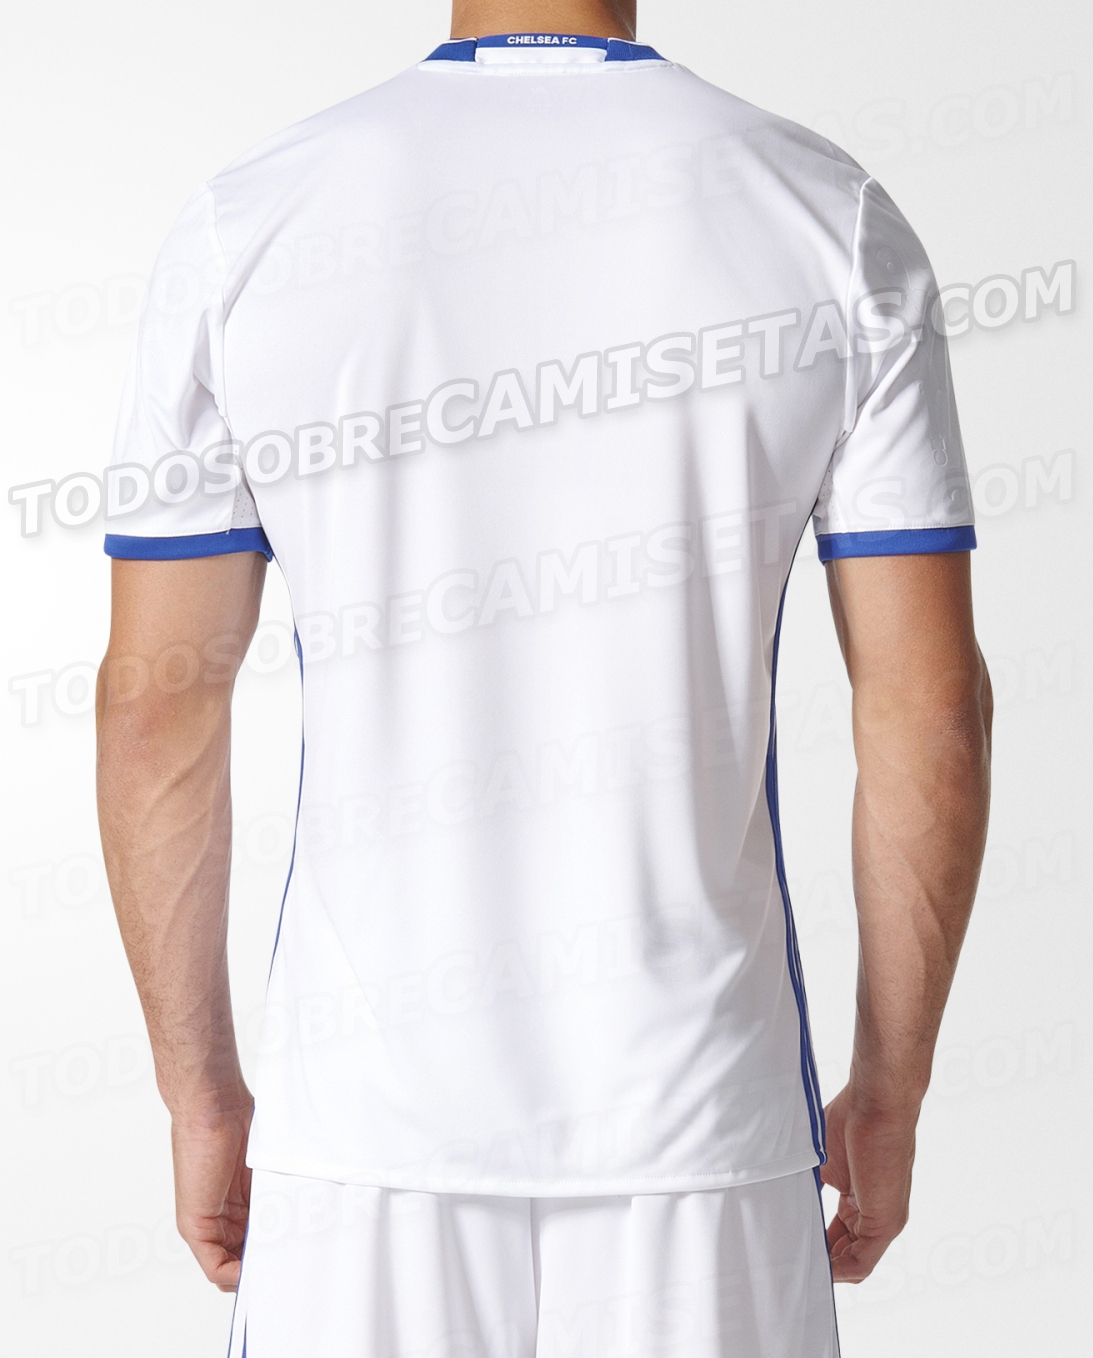 Chelsea FC adidas 2016-17 Third Kit